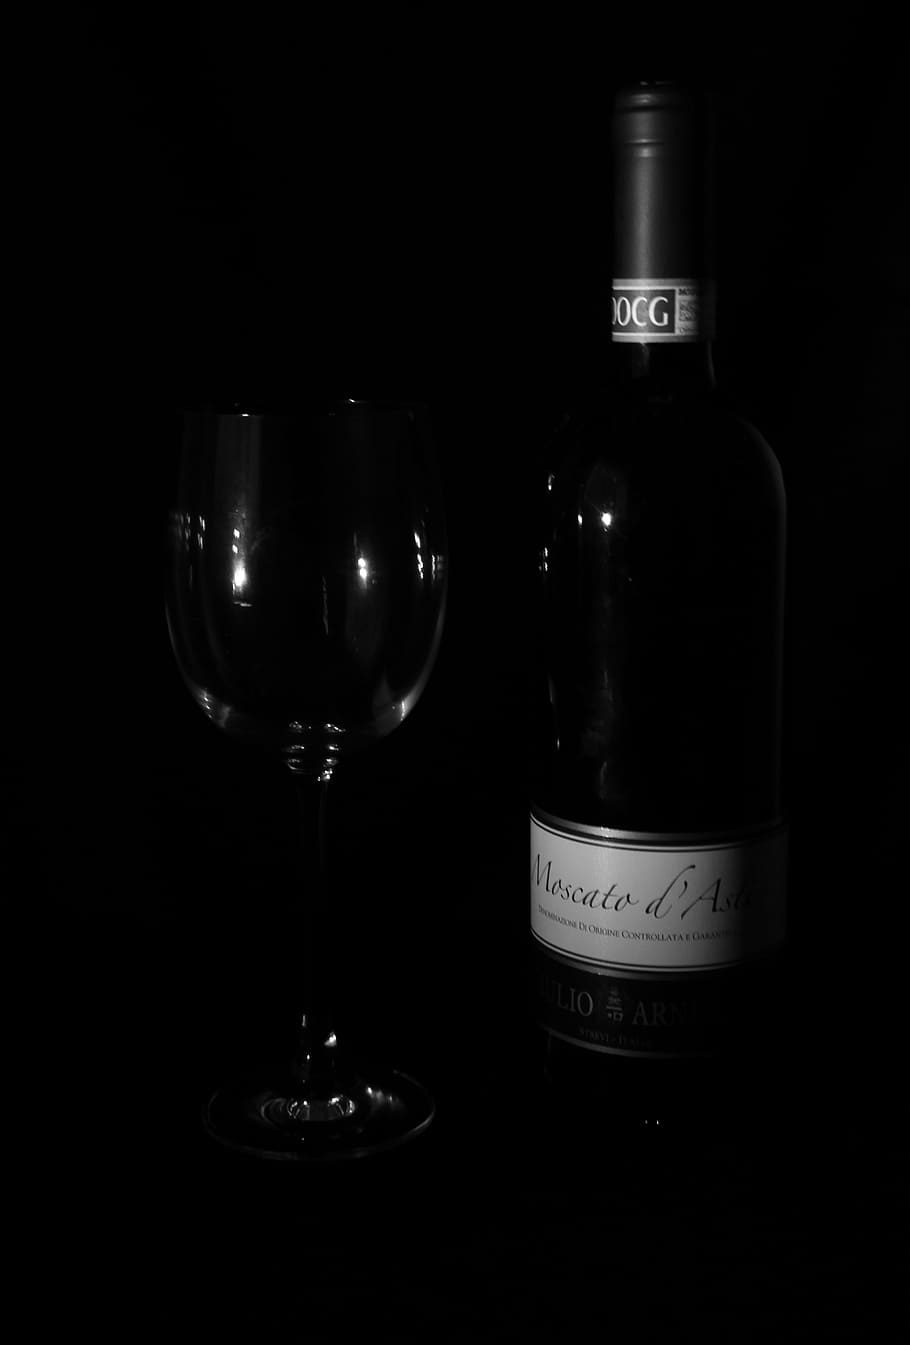 vinho, vidro, preto e branco, chave baixa, escuro, bebida, garrafa, comida e bebida, refresco, natureza morta